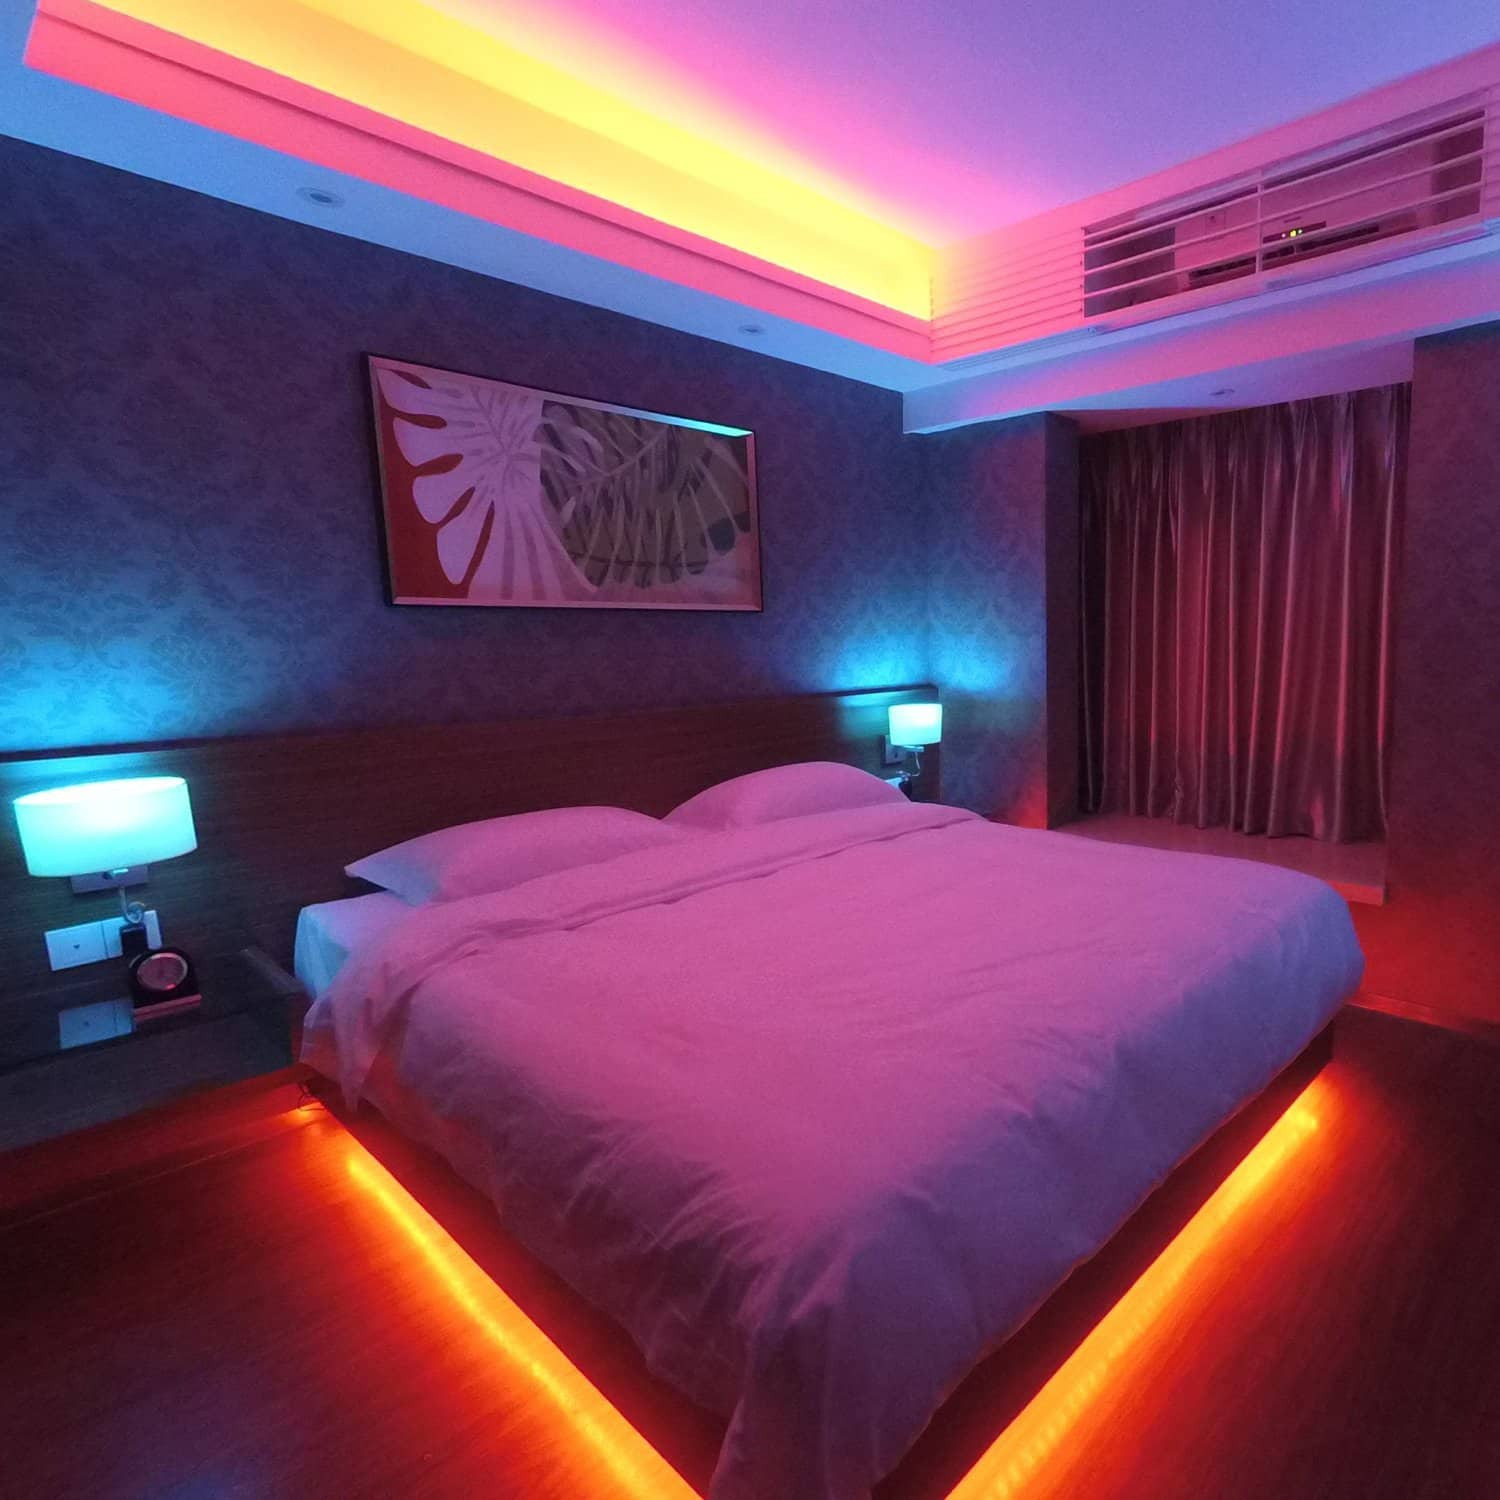 Led Lights For Bedroom
 Revogi Smart Color LED Light Strip Reviews Coupons and Deals